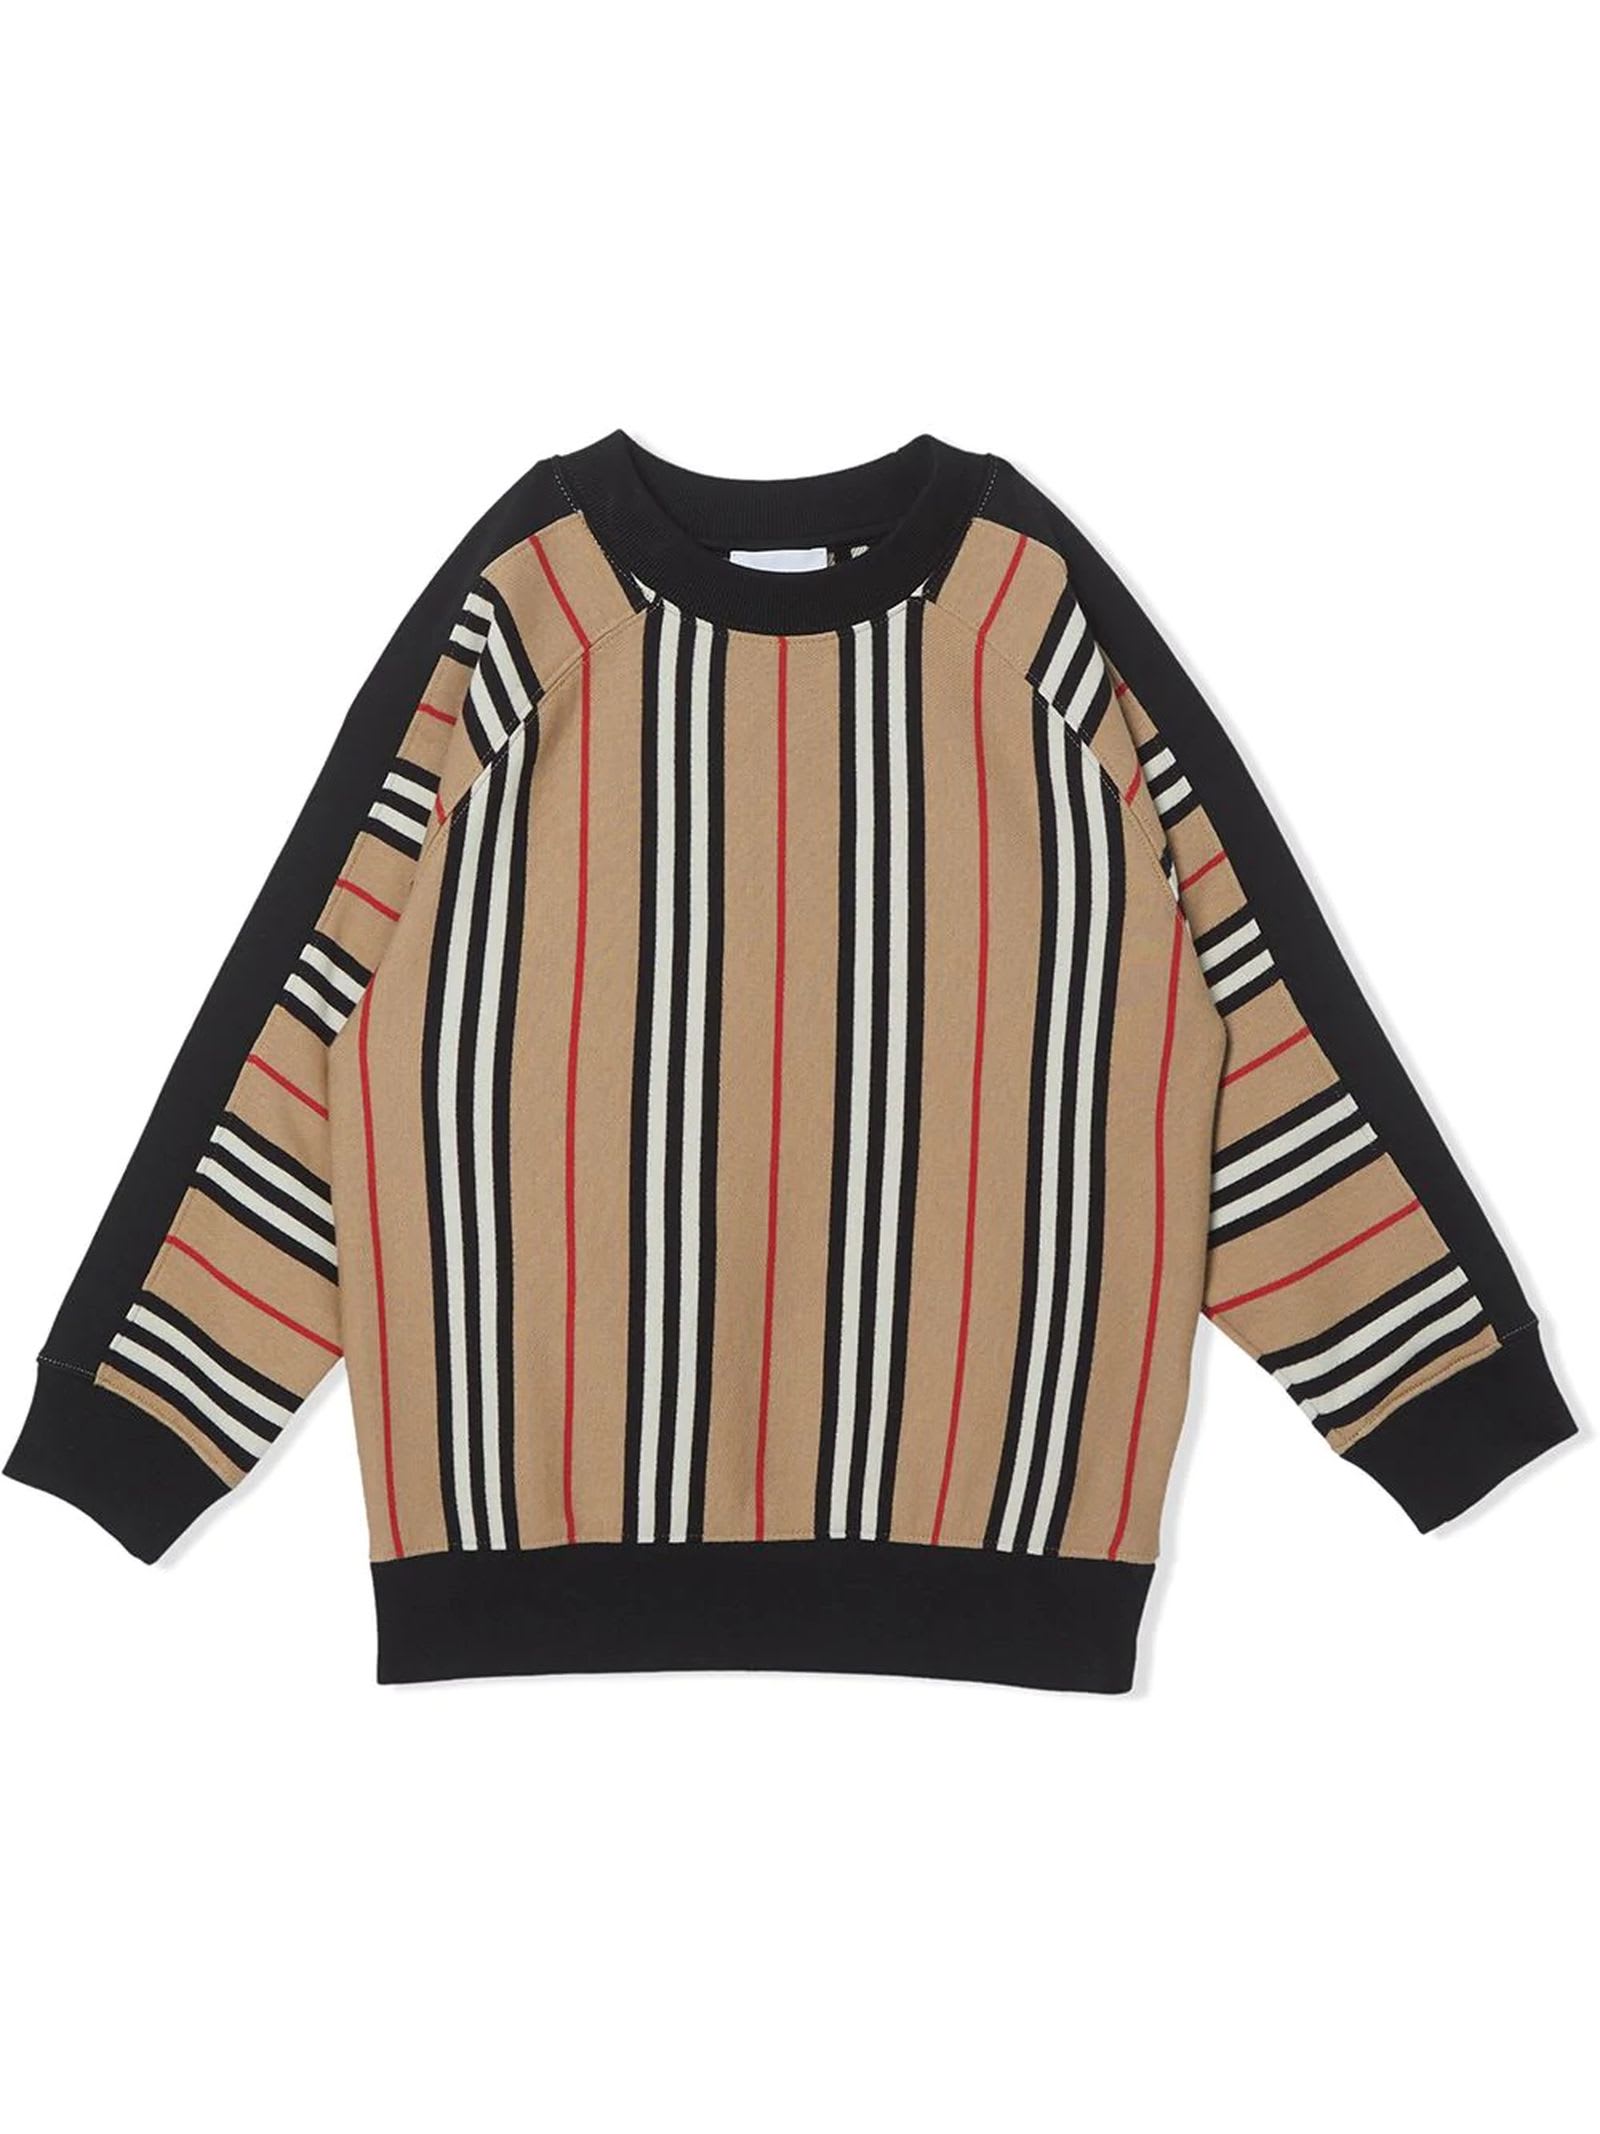 Burberry Black And Beige Cotton Sweatshirt